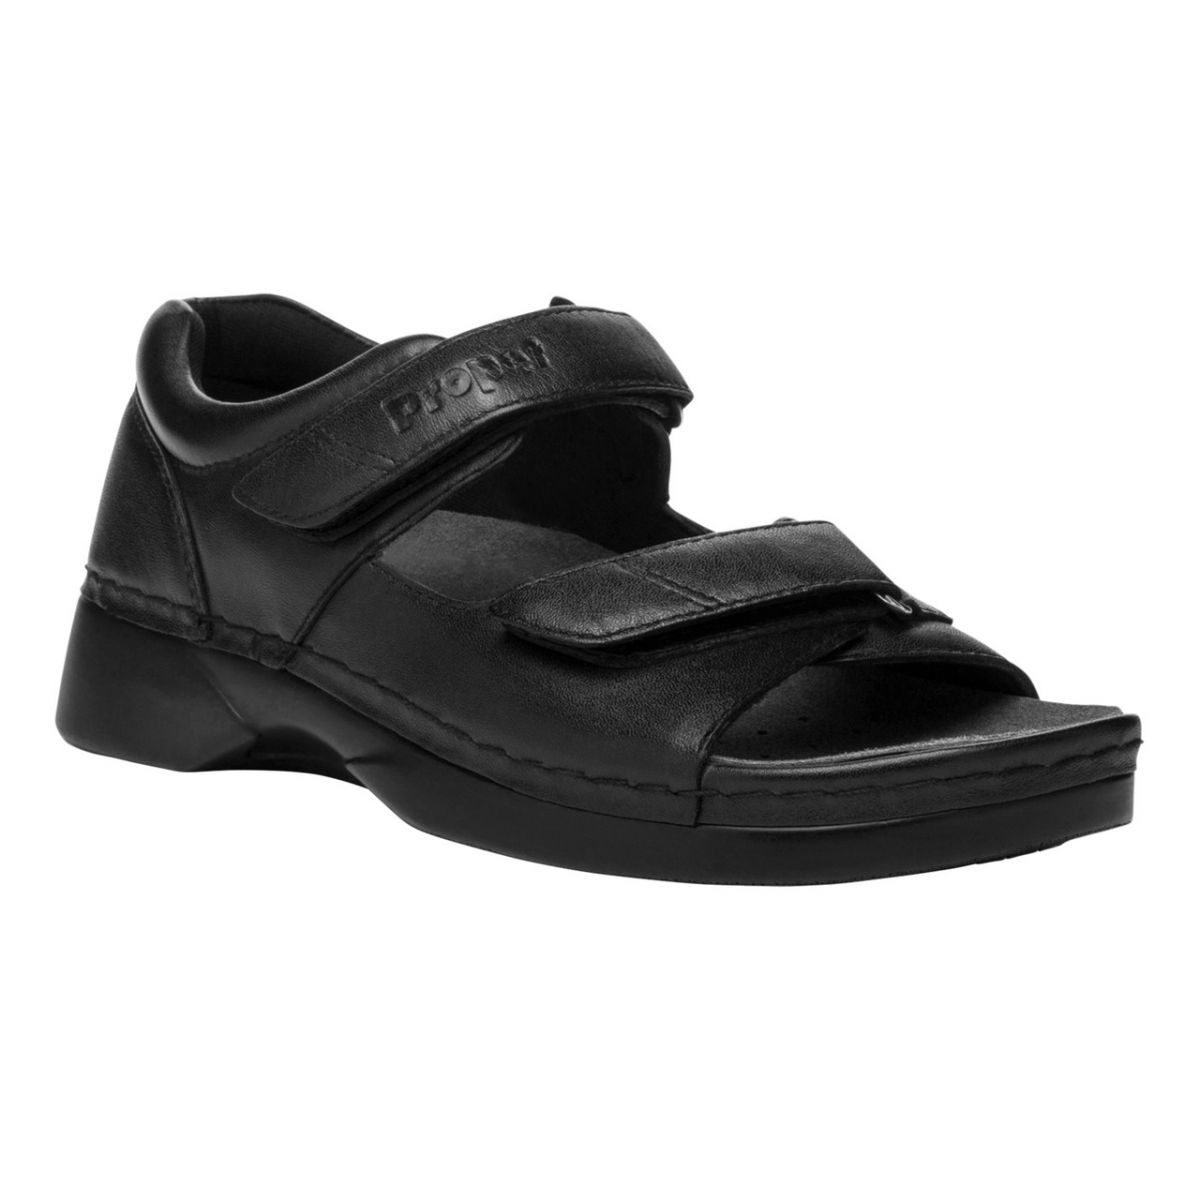 Propet Women's Pedic Walker Sandal Black - W0089B BLACK - BLACK, 7 X-Wide